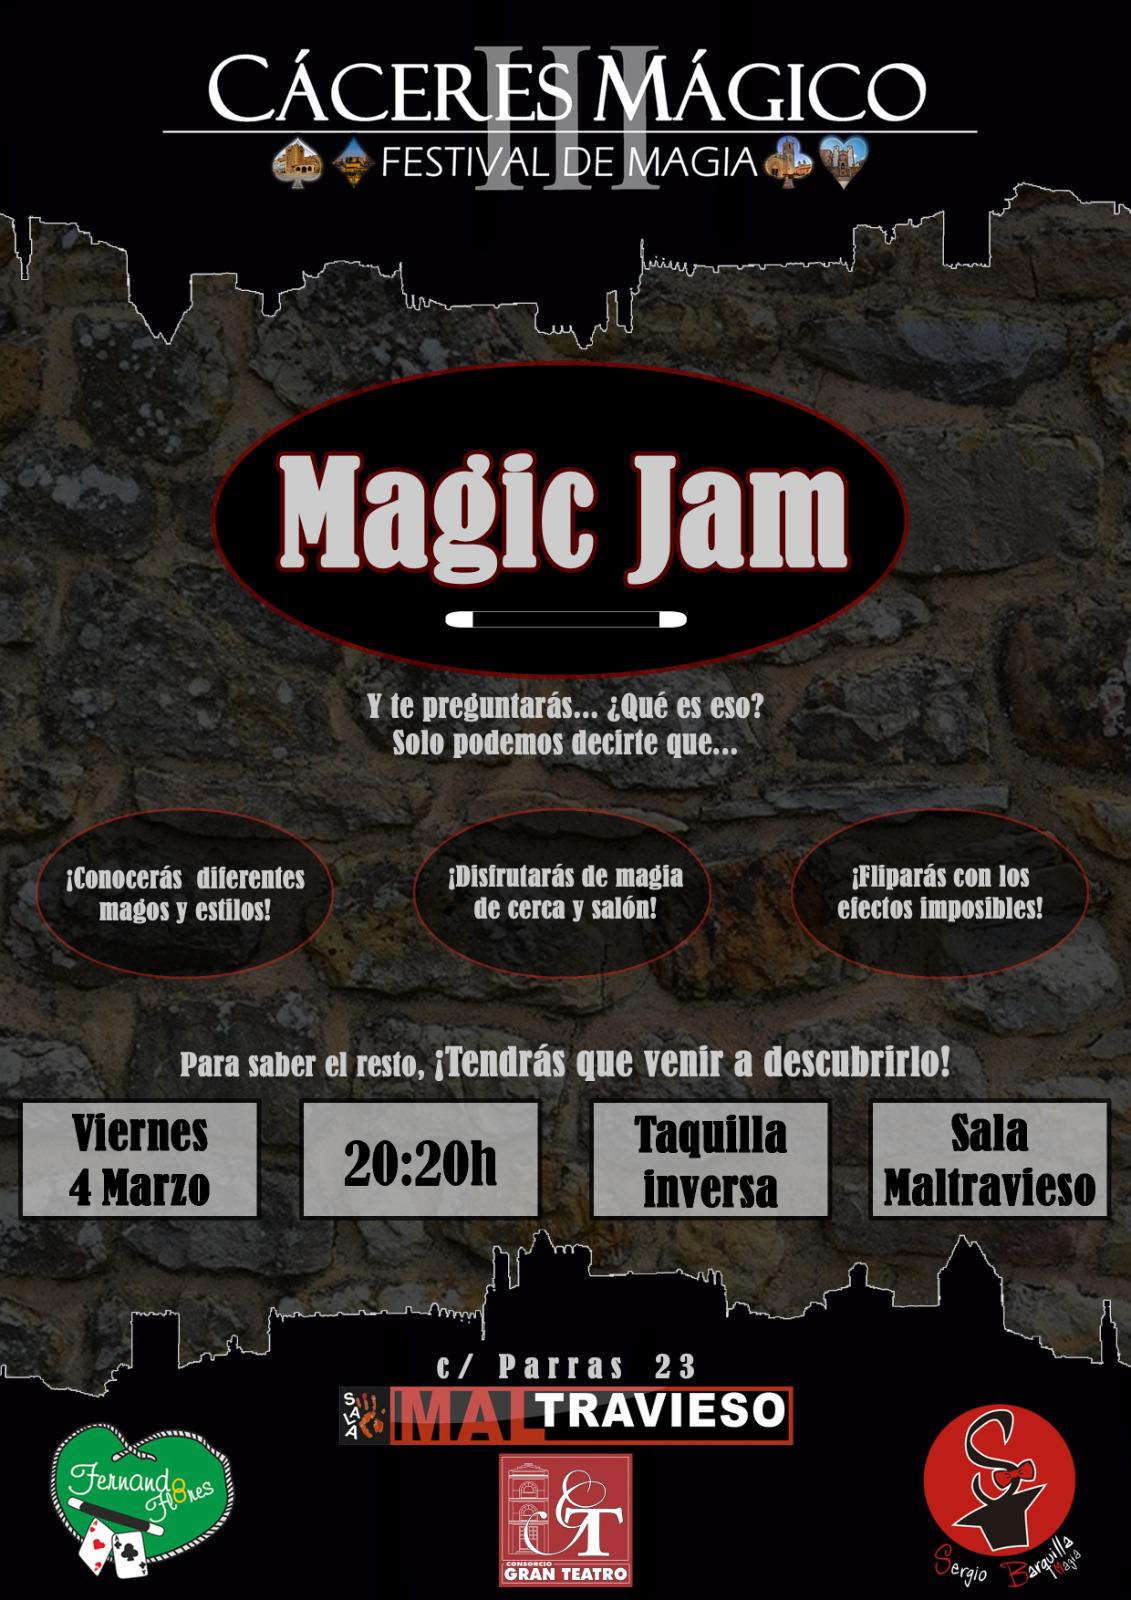 MAGIC JAM Dentro del Festival de Magia “Cáceres Mágico”